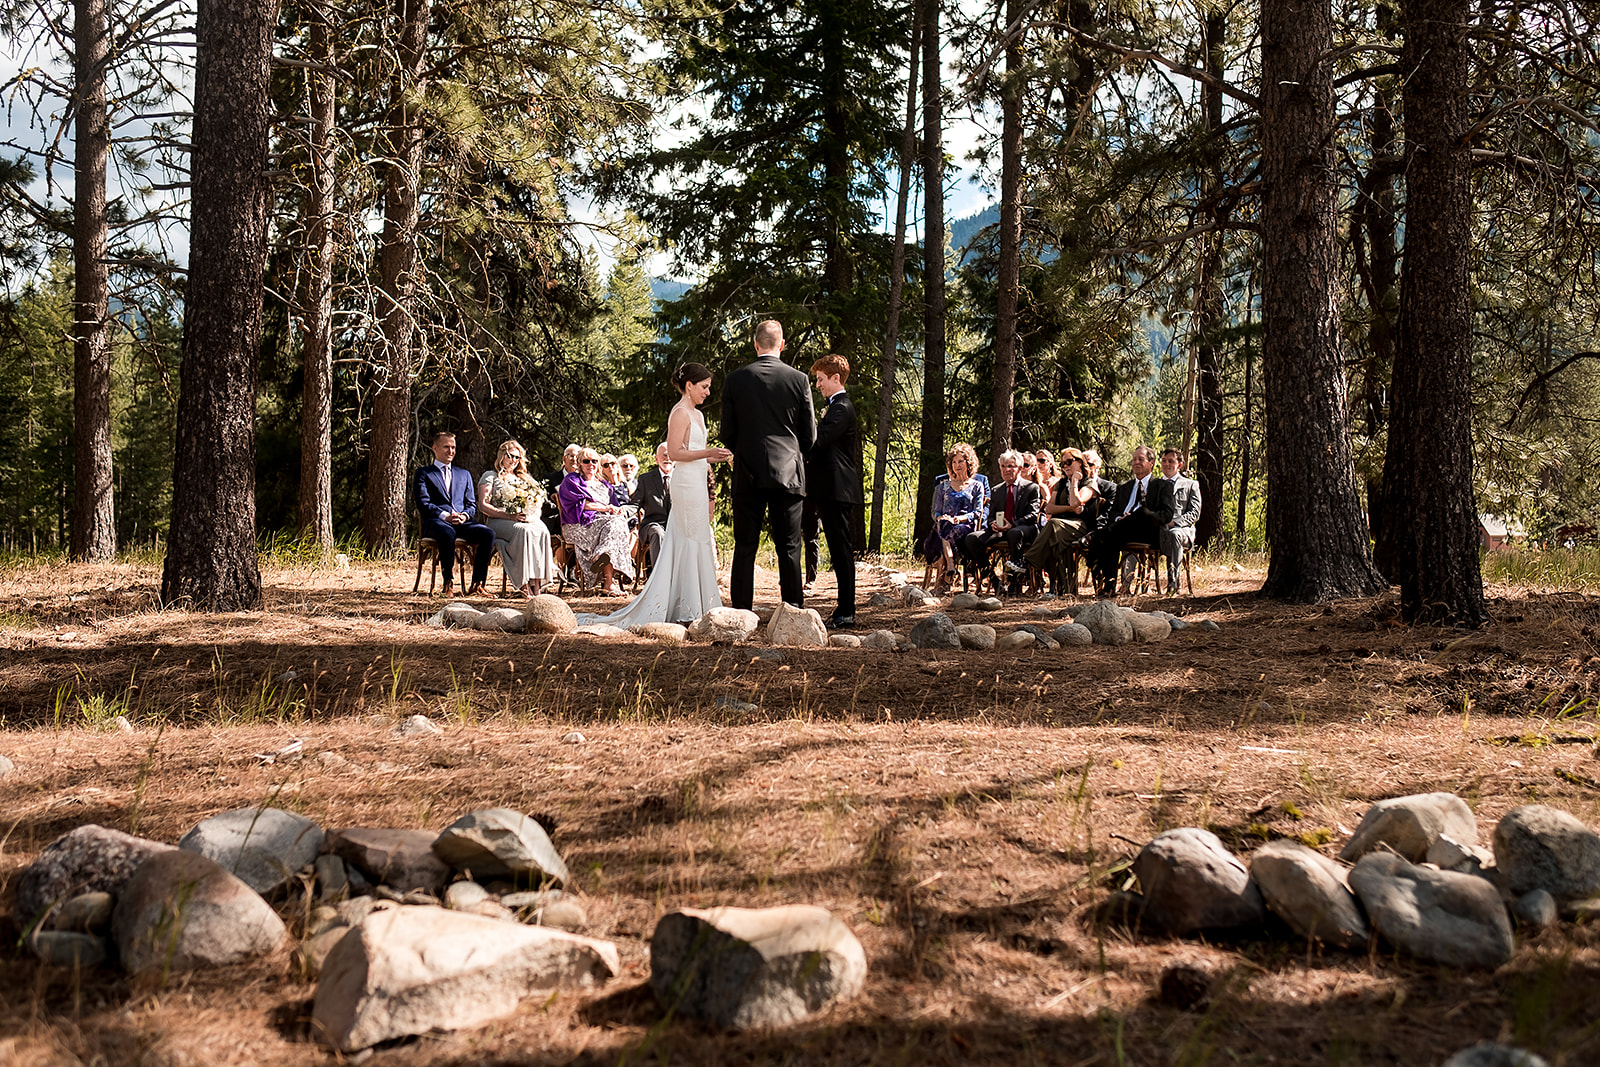 methow community trail wedding ceremony location 